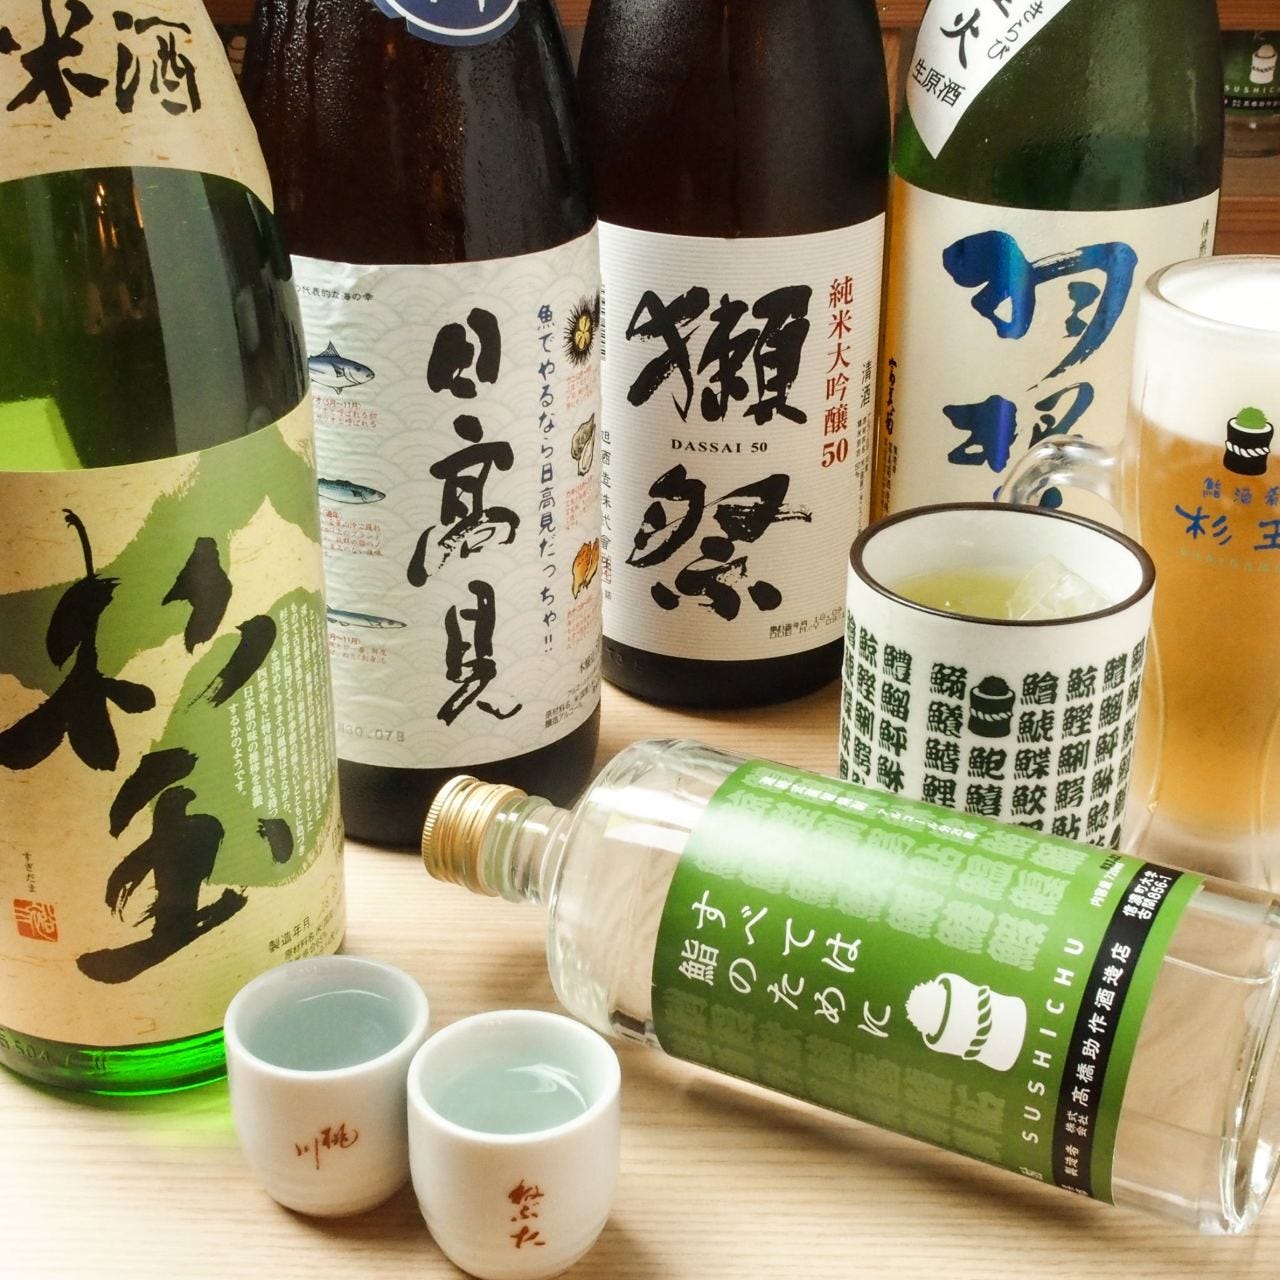 鮨・酒・肴 杉玉 祖師ヶ谷大蔵